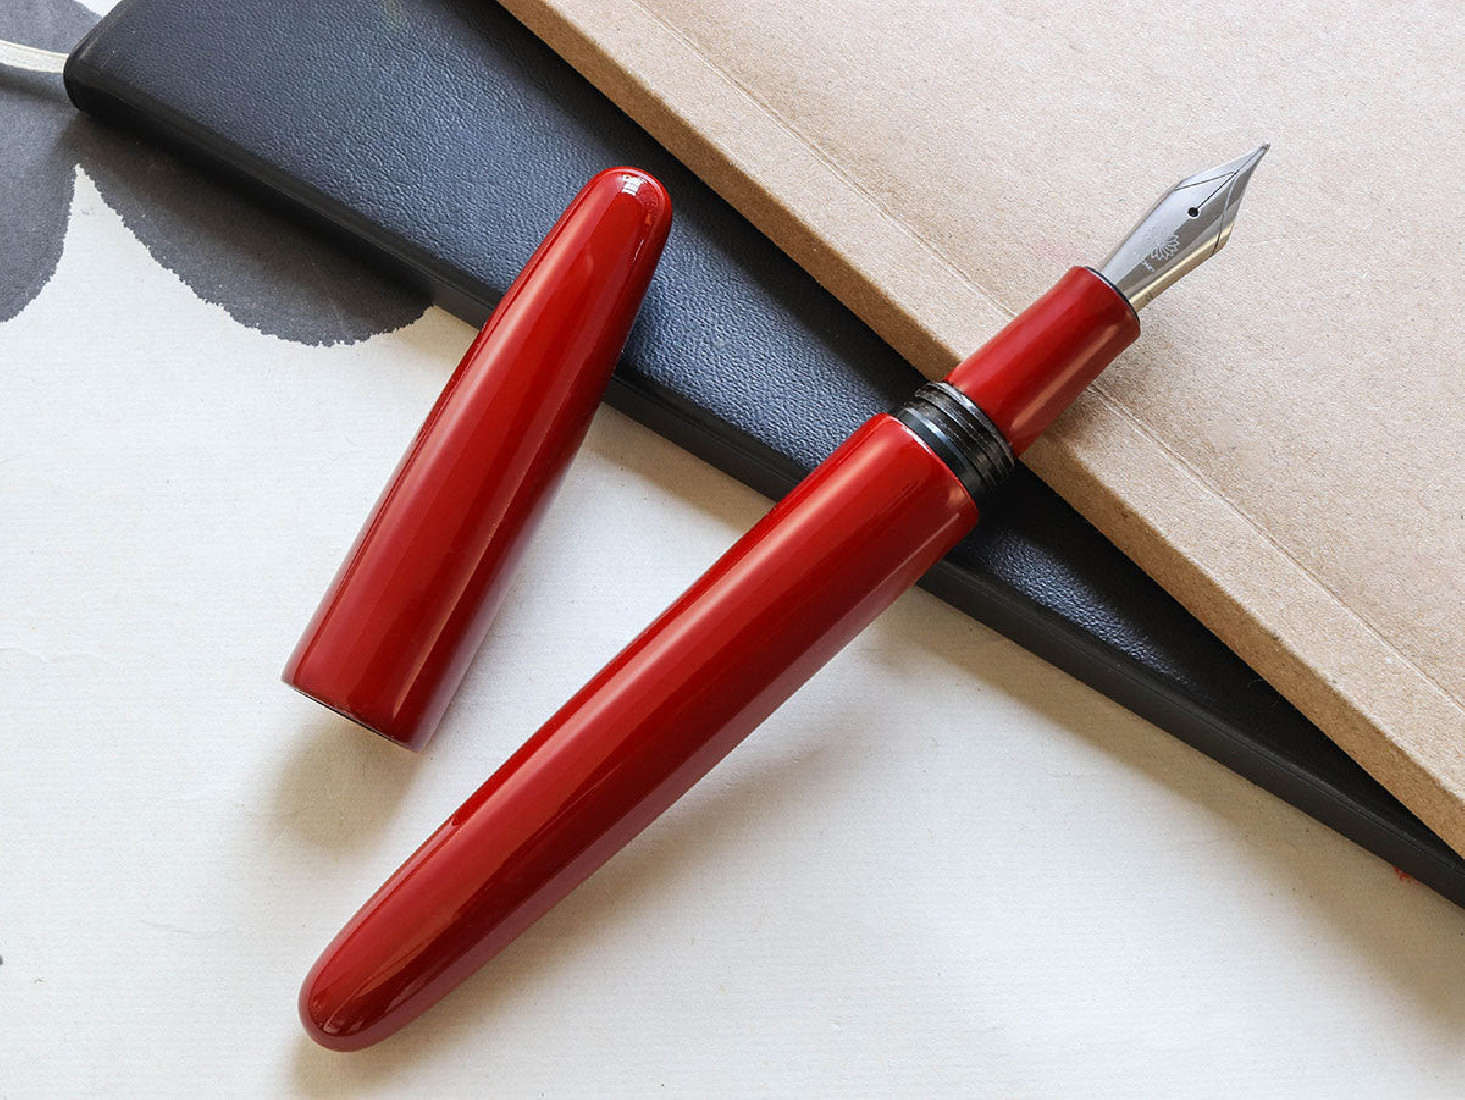 Wancher Dream pen True Urushi Red stainless steel nib fountain pen